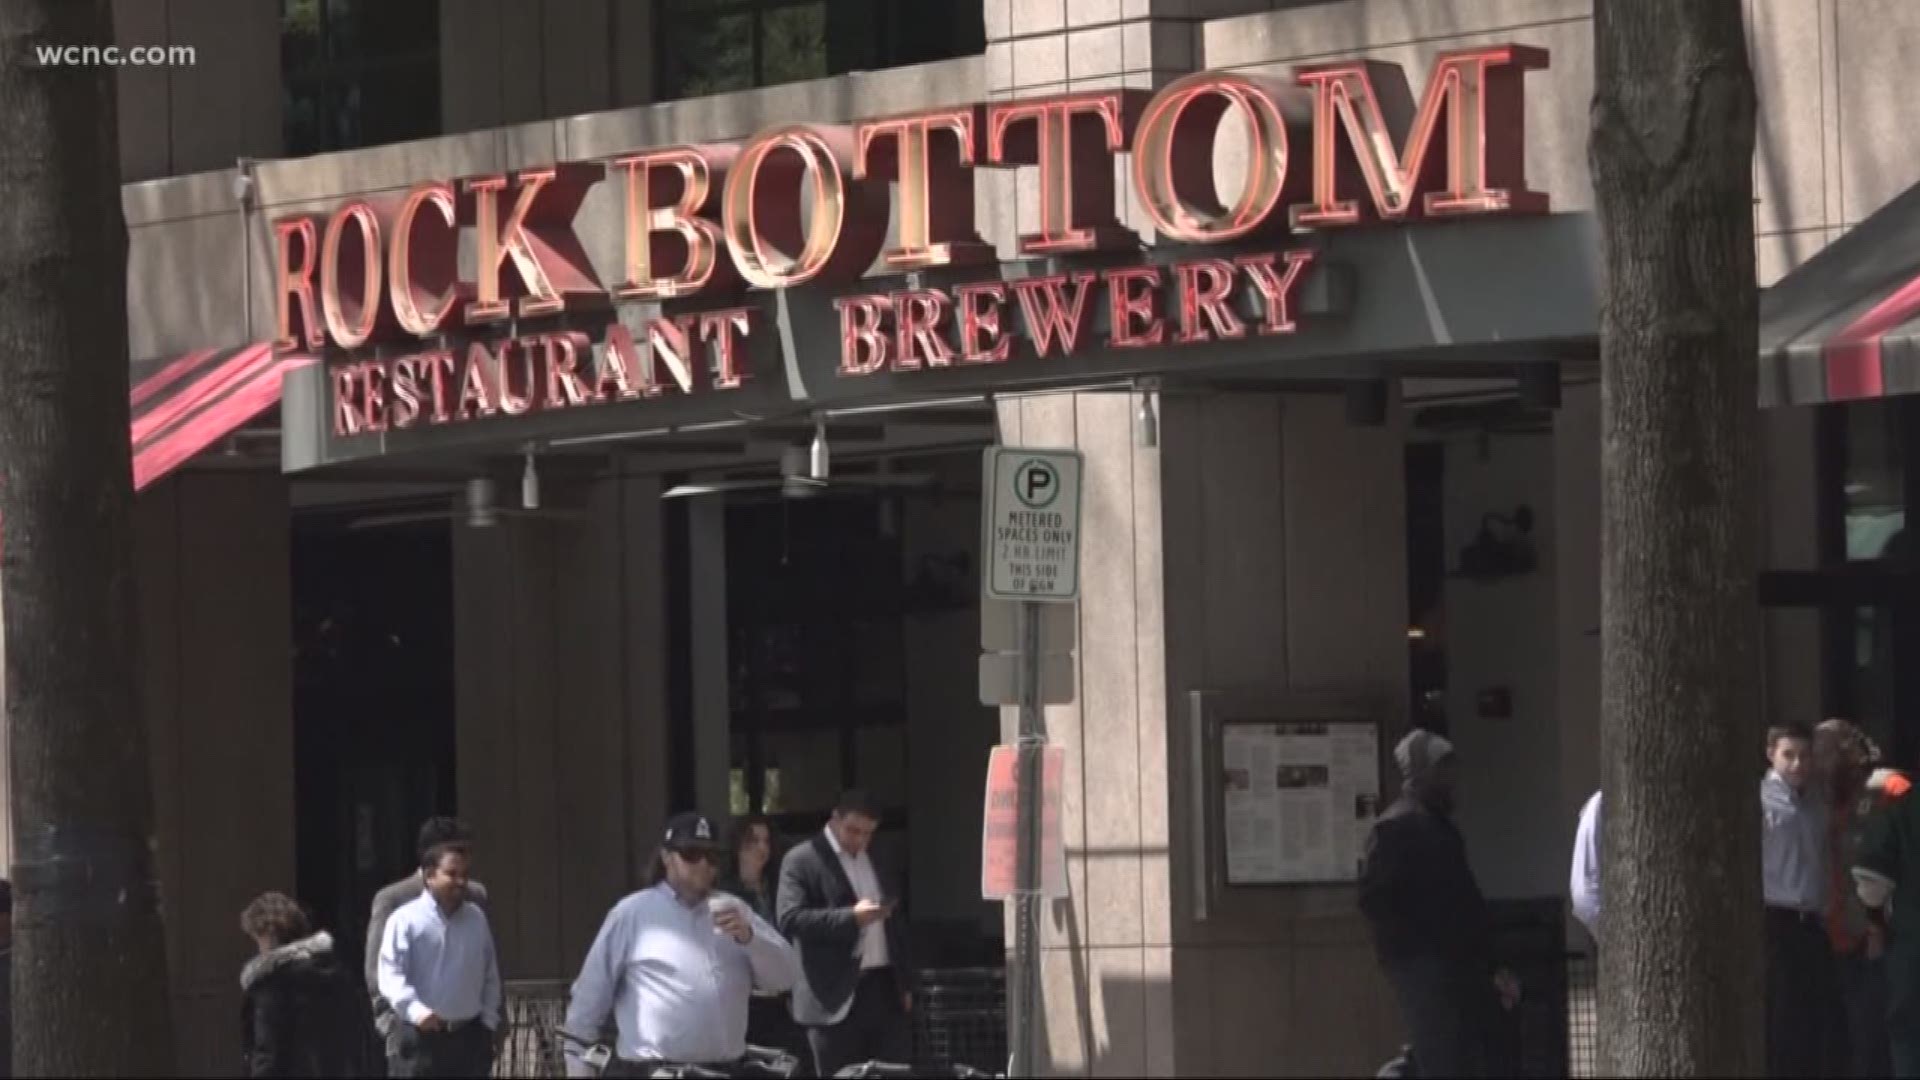 Popular uptown brewery lands on restaurant report card